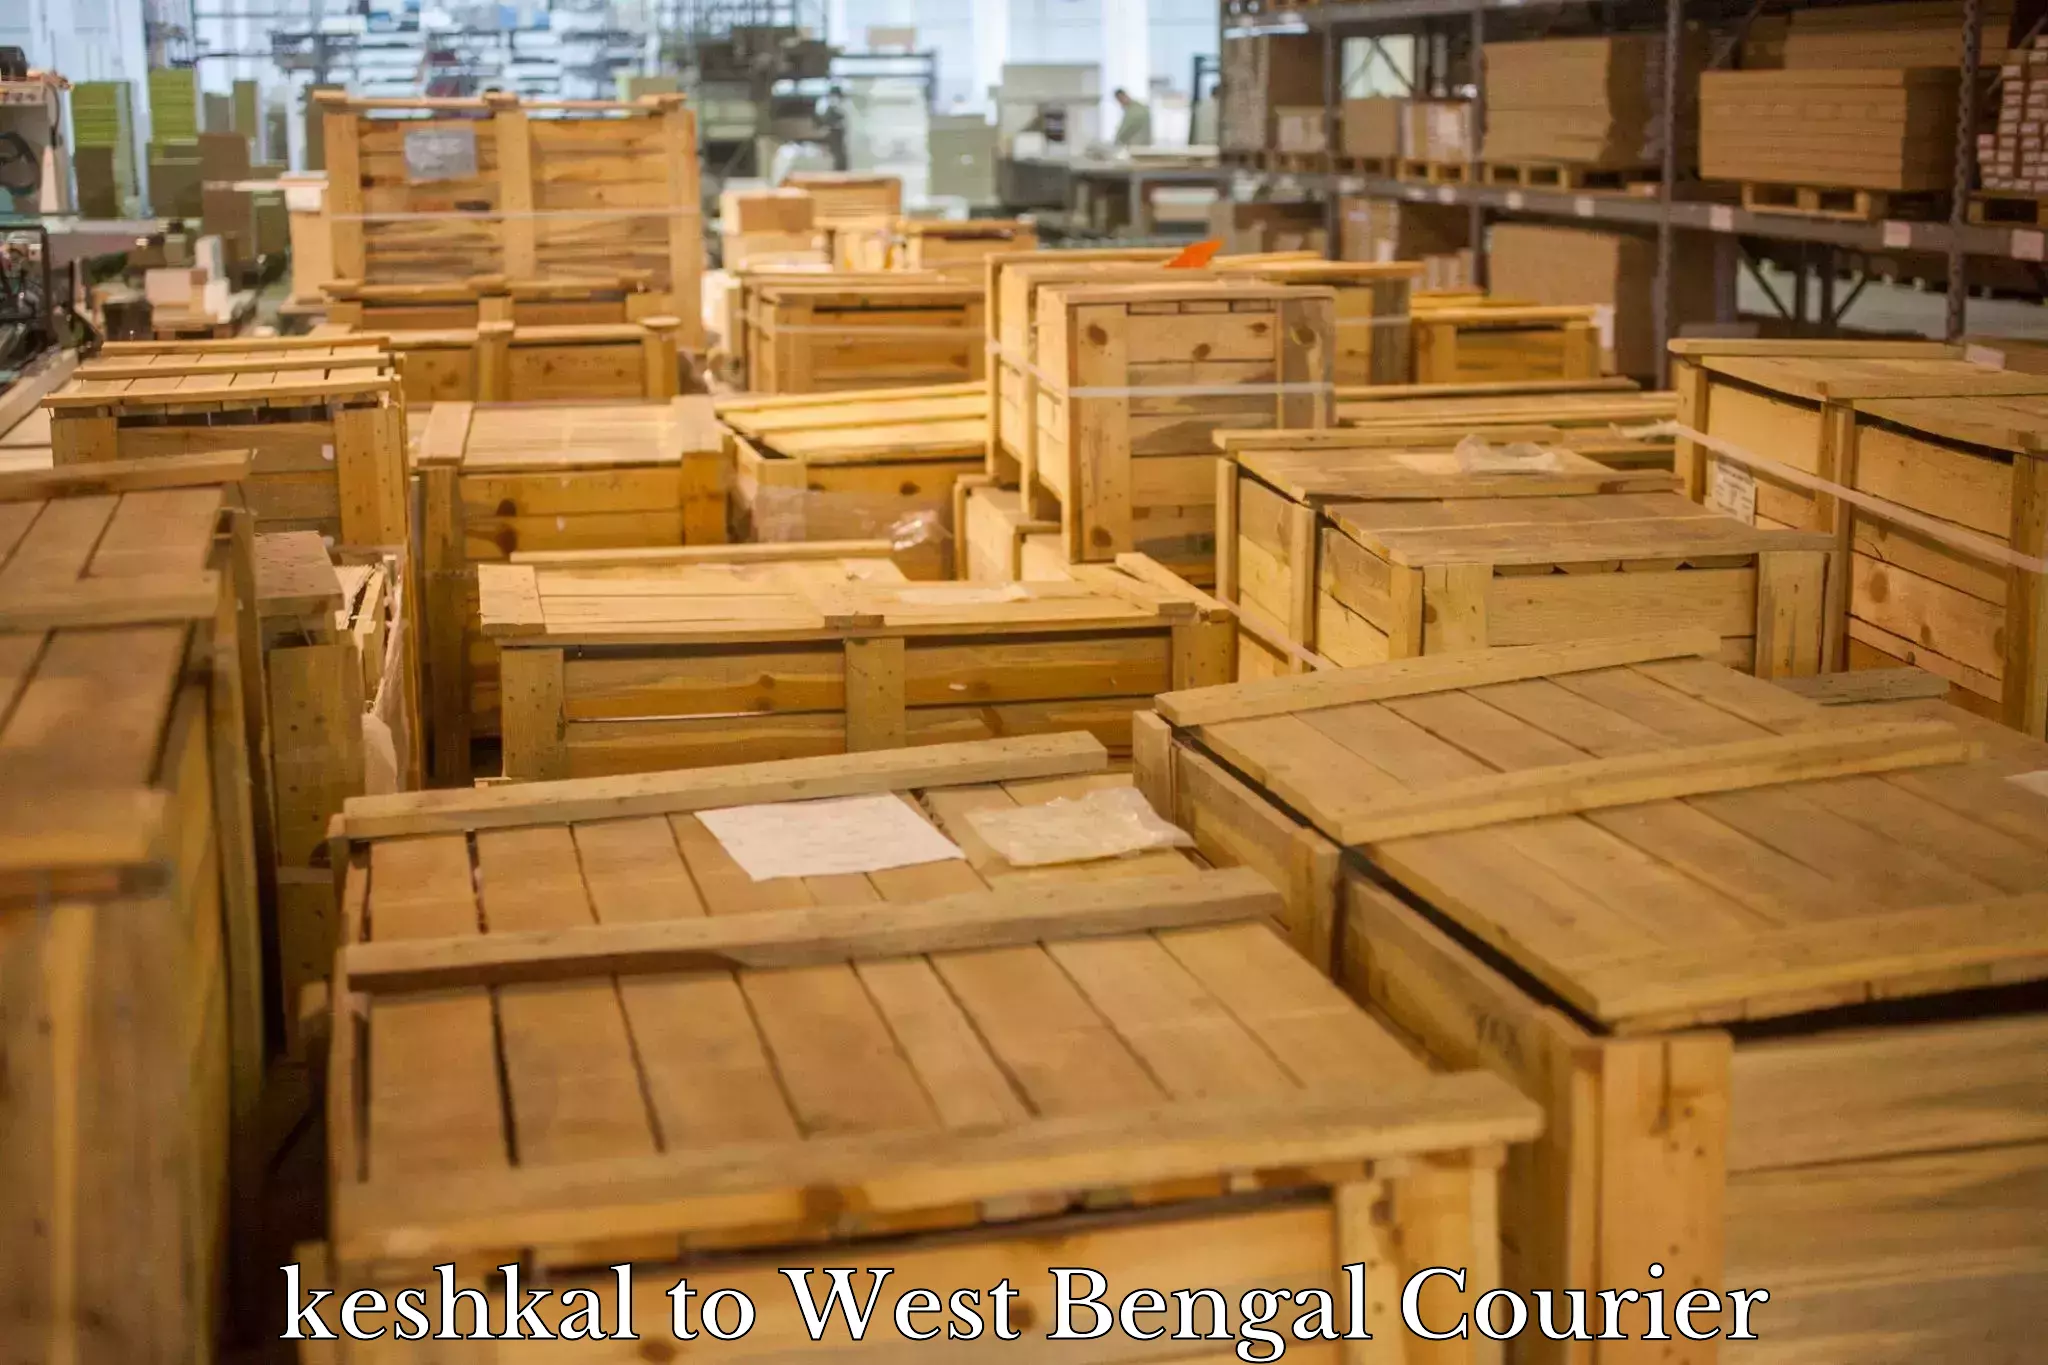 Small parcel delivery keshkal to Kolkata Port